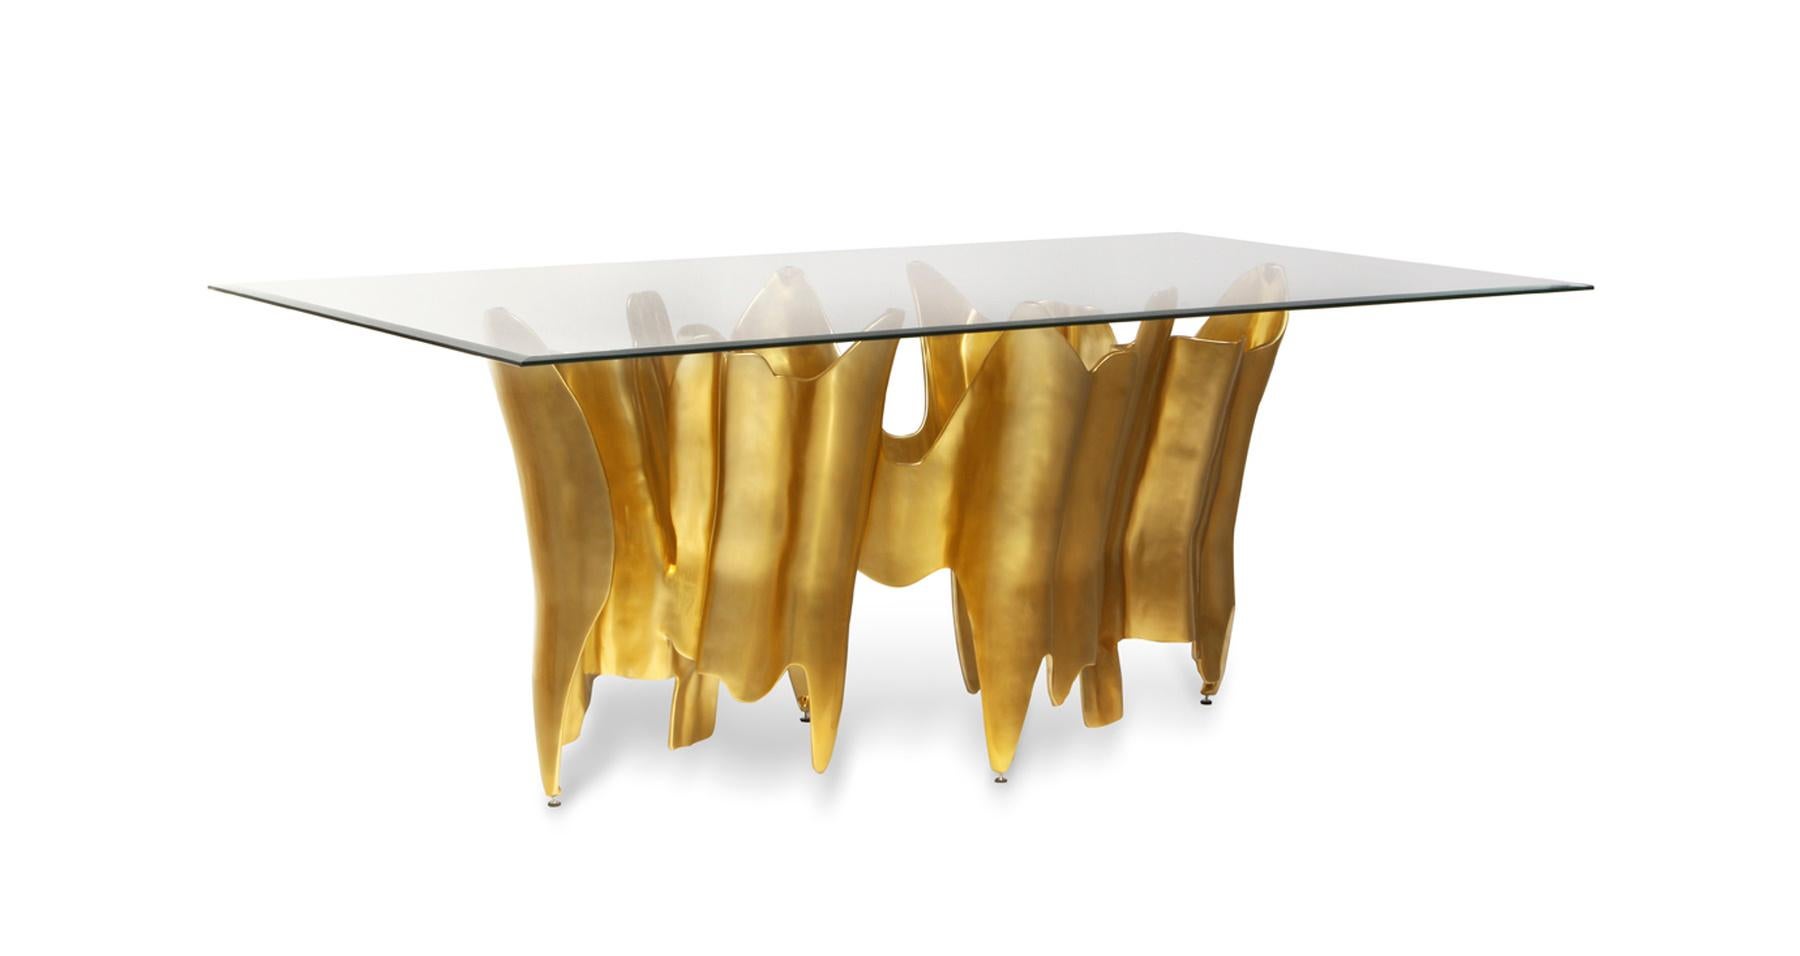 Big dinning table design 